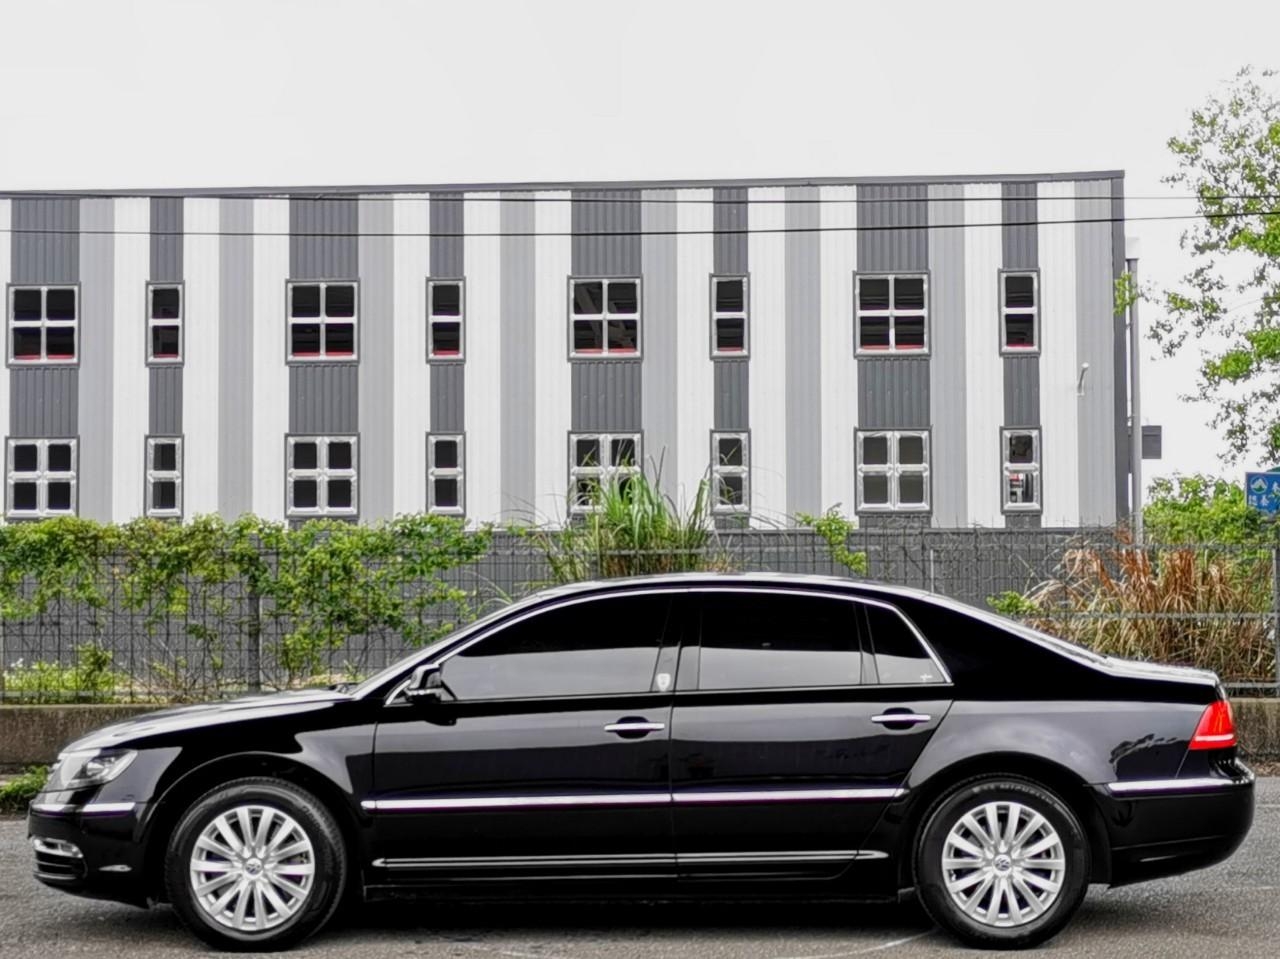 Volkswagen 二手車買賣專門店-2012-PHEATON 3.0 V6 TDI